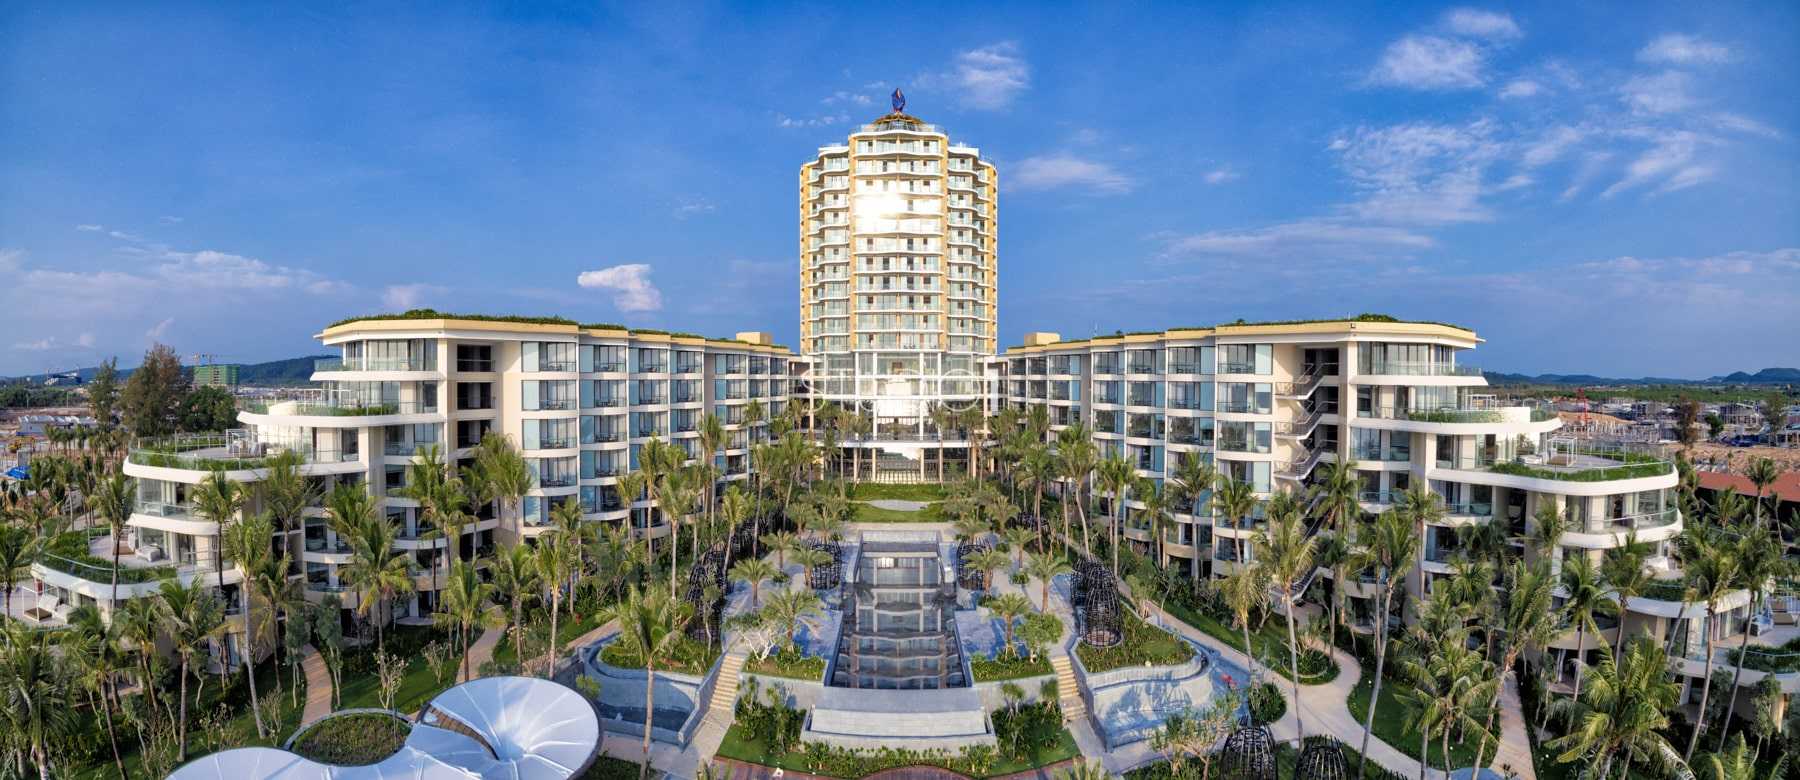 InterContinental Phu Quoc Long Beach Resort.